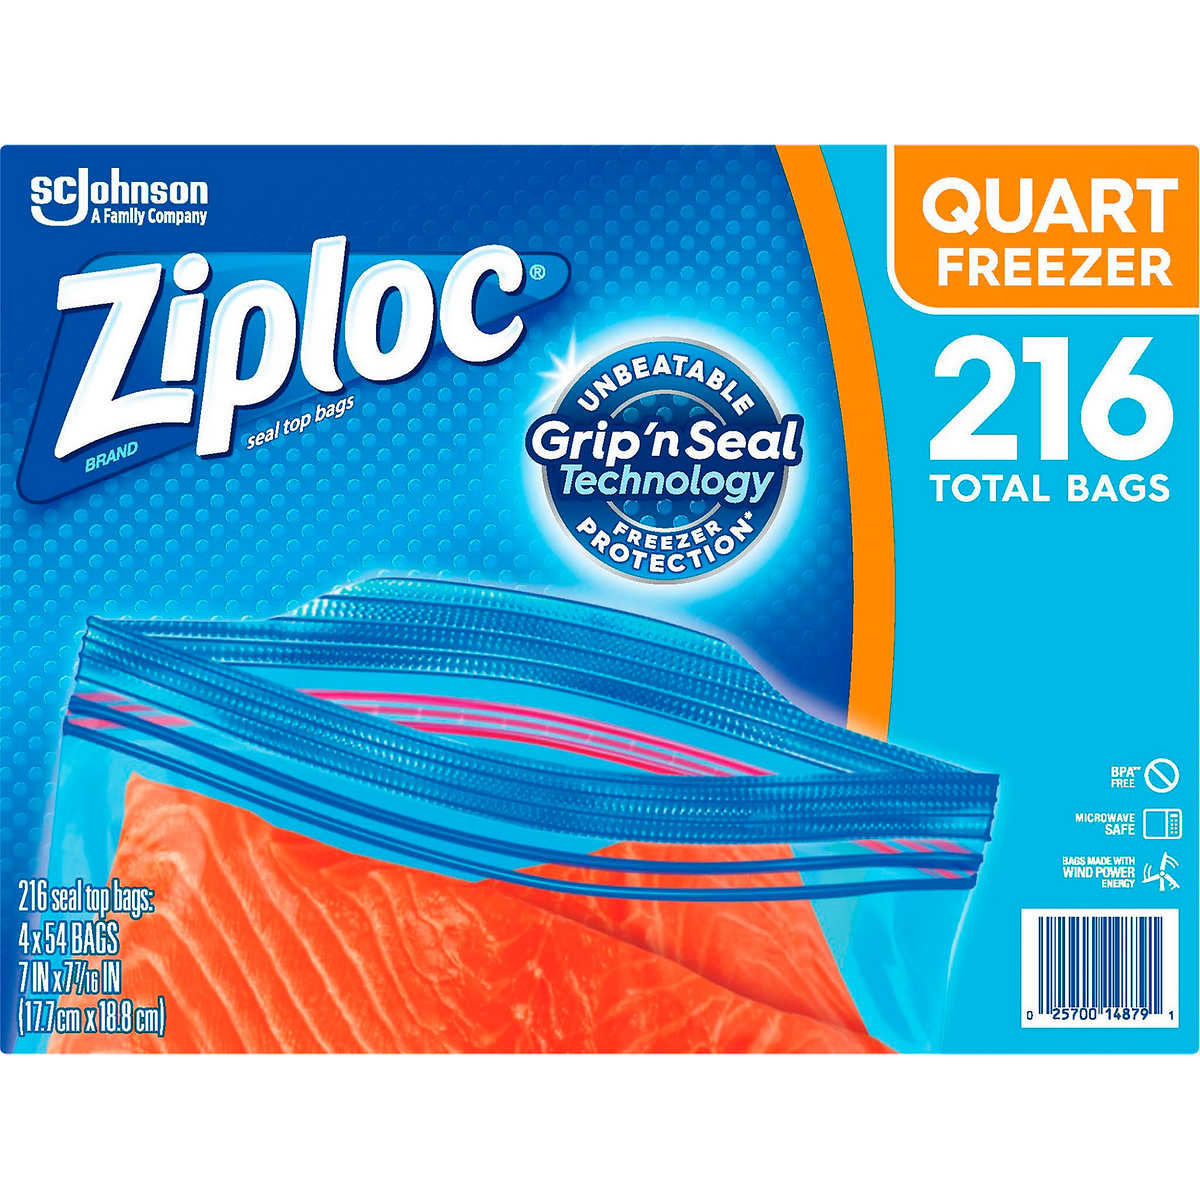 Details about   Ziploc Easy Open Tabs Freezer Quart Bags 216 Ct. 